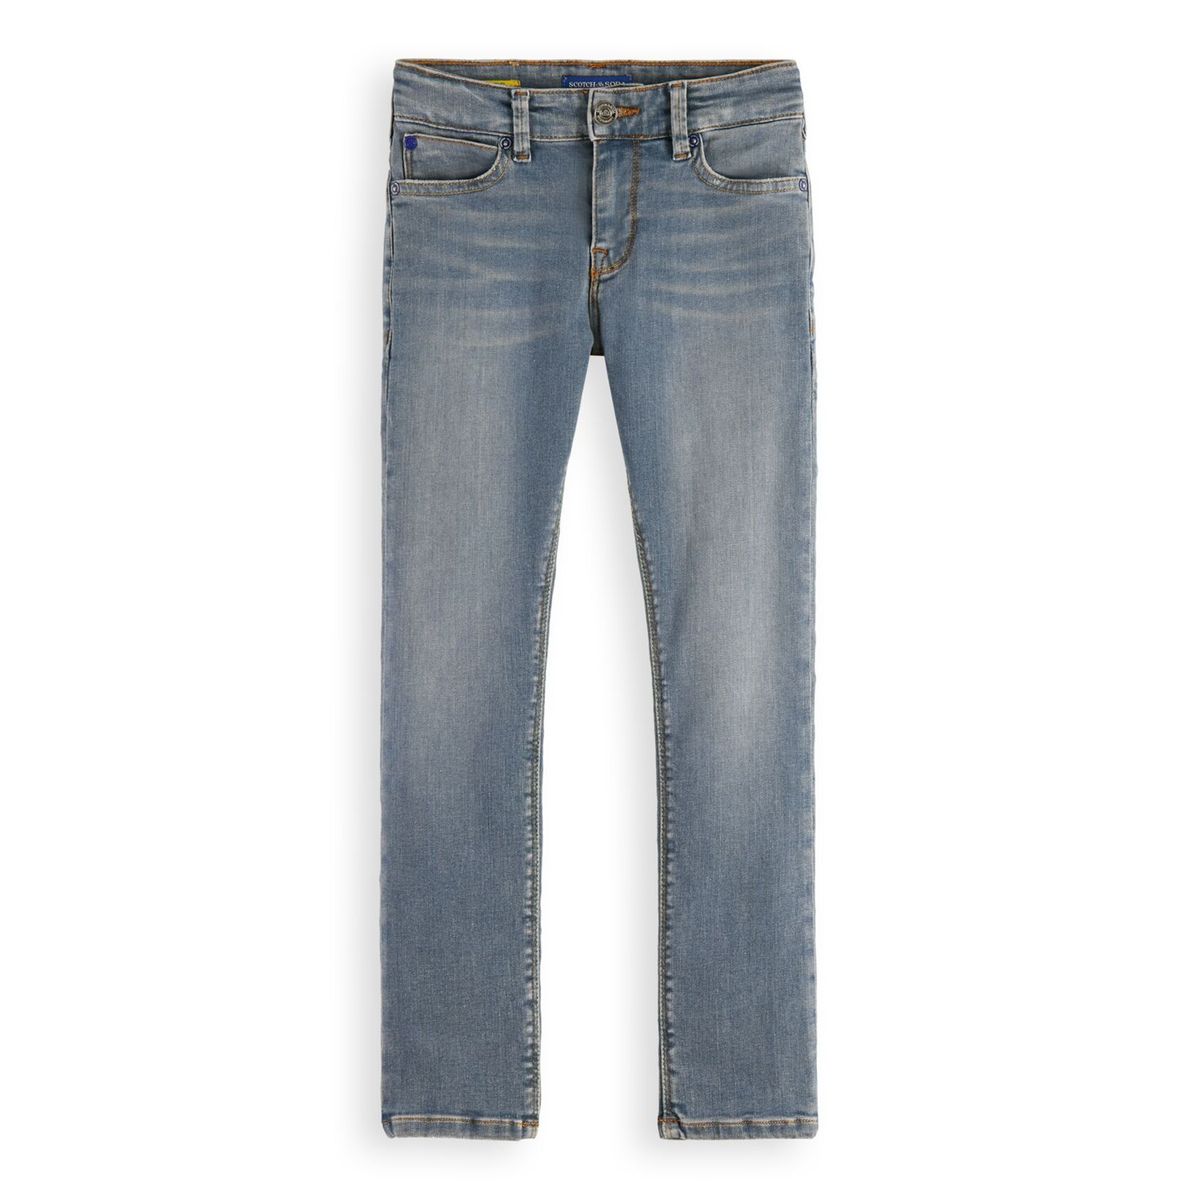 Jean slim Tigger coton Bleu Galeries Lafayette Fille Vêtements Pantalons & Jeans Jeans Skinny 